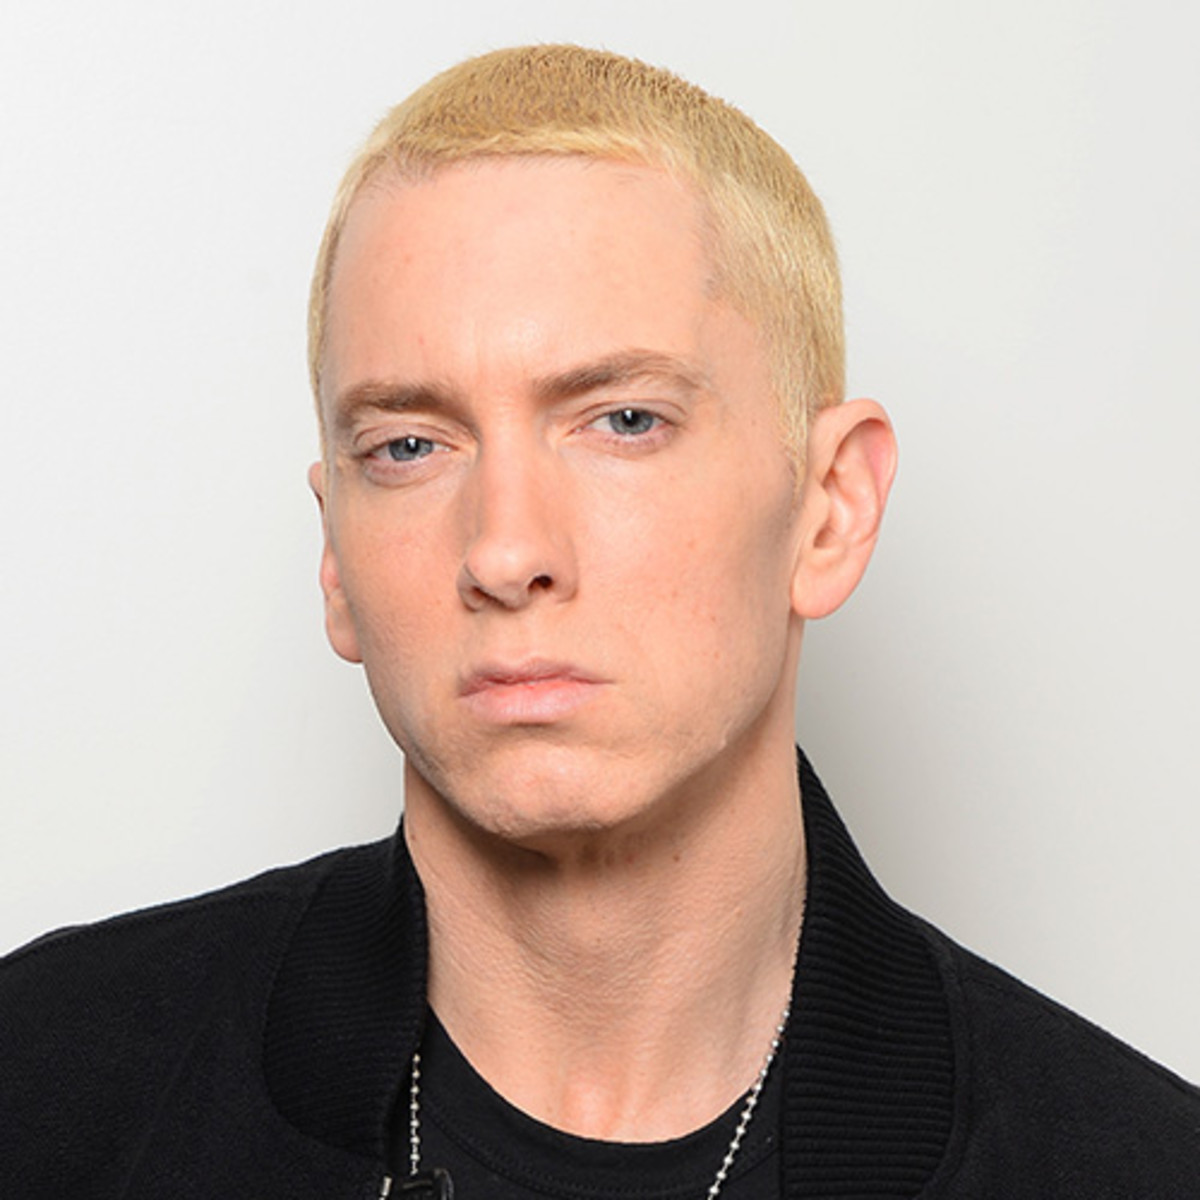 Eminem headshot